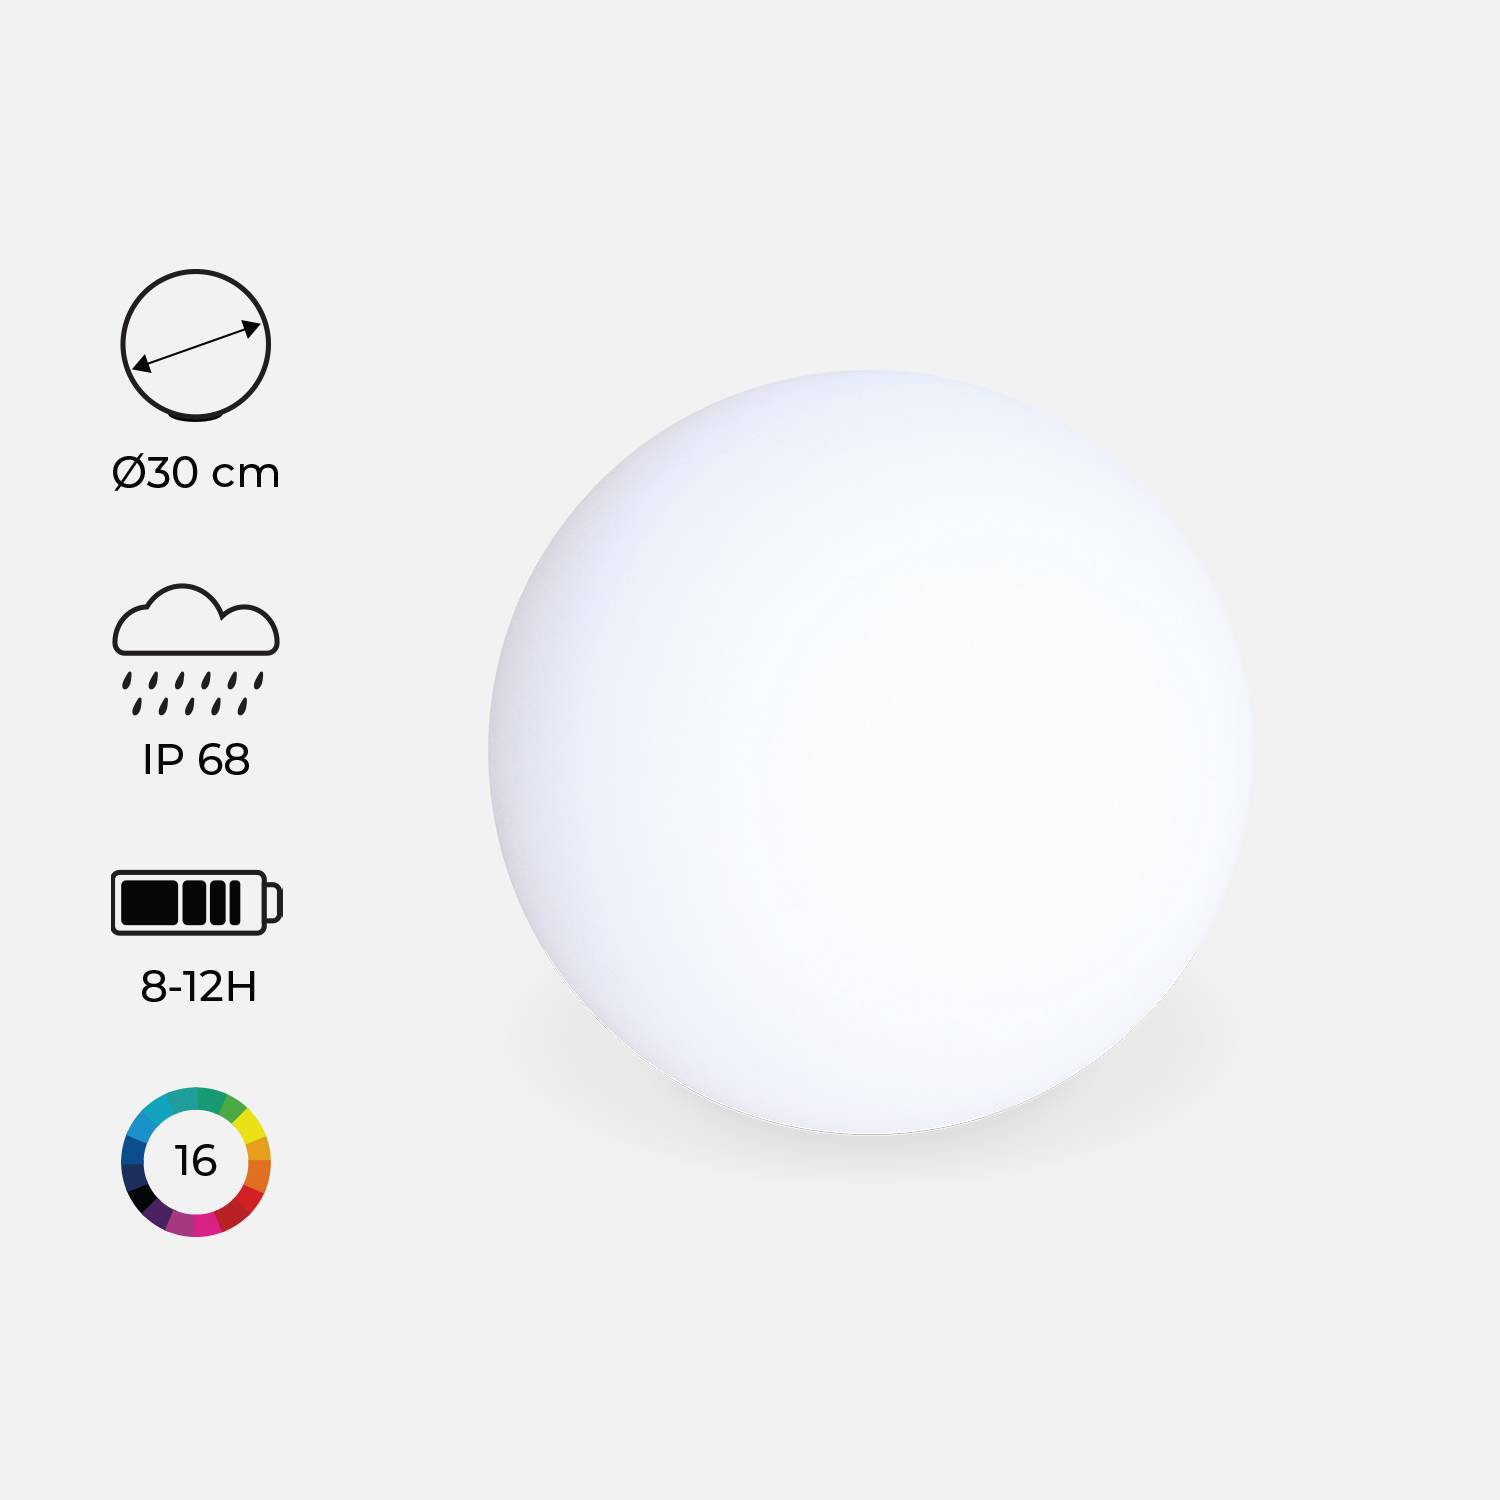 Lampada LED 30cm - Sfera decorativa luminosa,16 colori, Ø 30 cm, caricabatterie ad induzione senza fili. Photo2